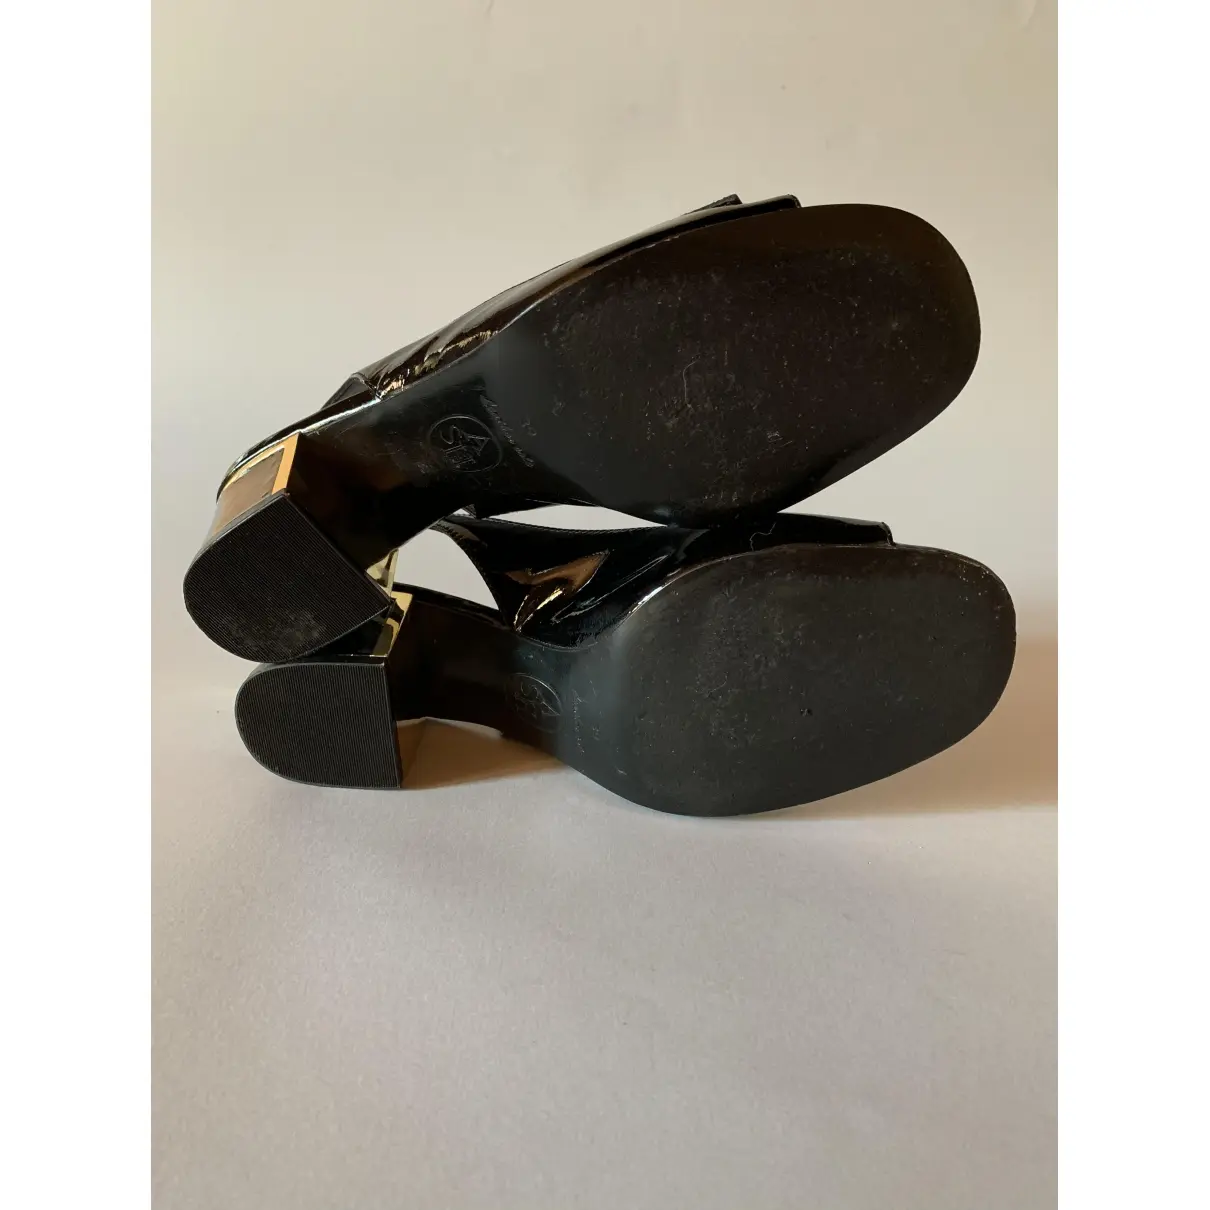 Patent leather sandals Ash